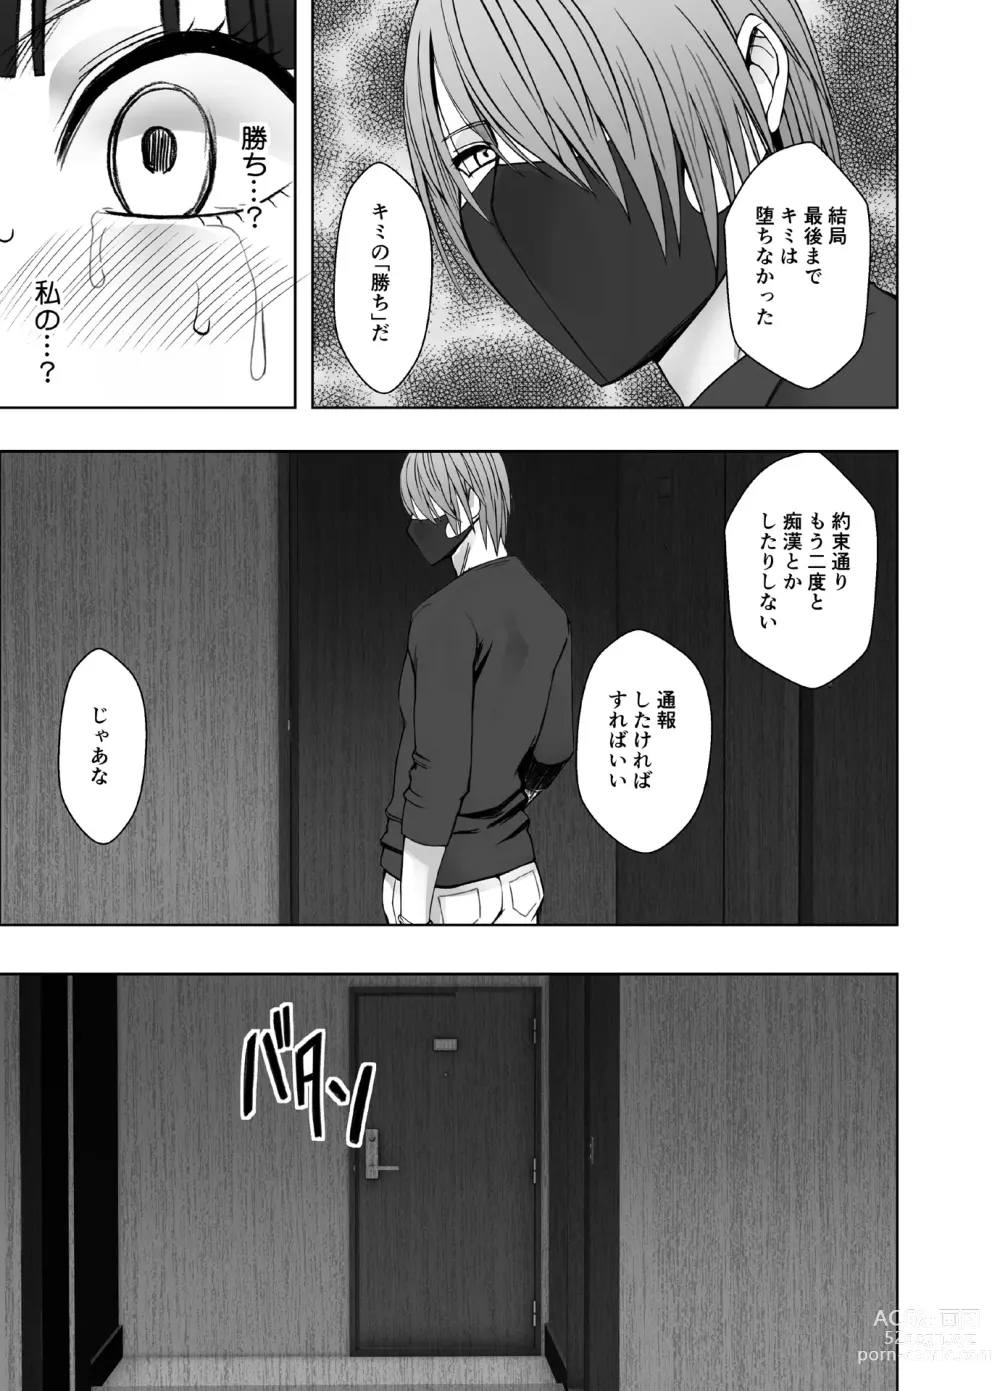 Page 66 of doujinshi VirginTrain R2